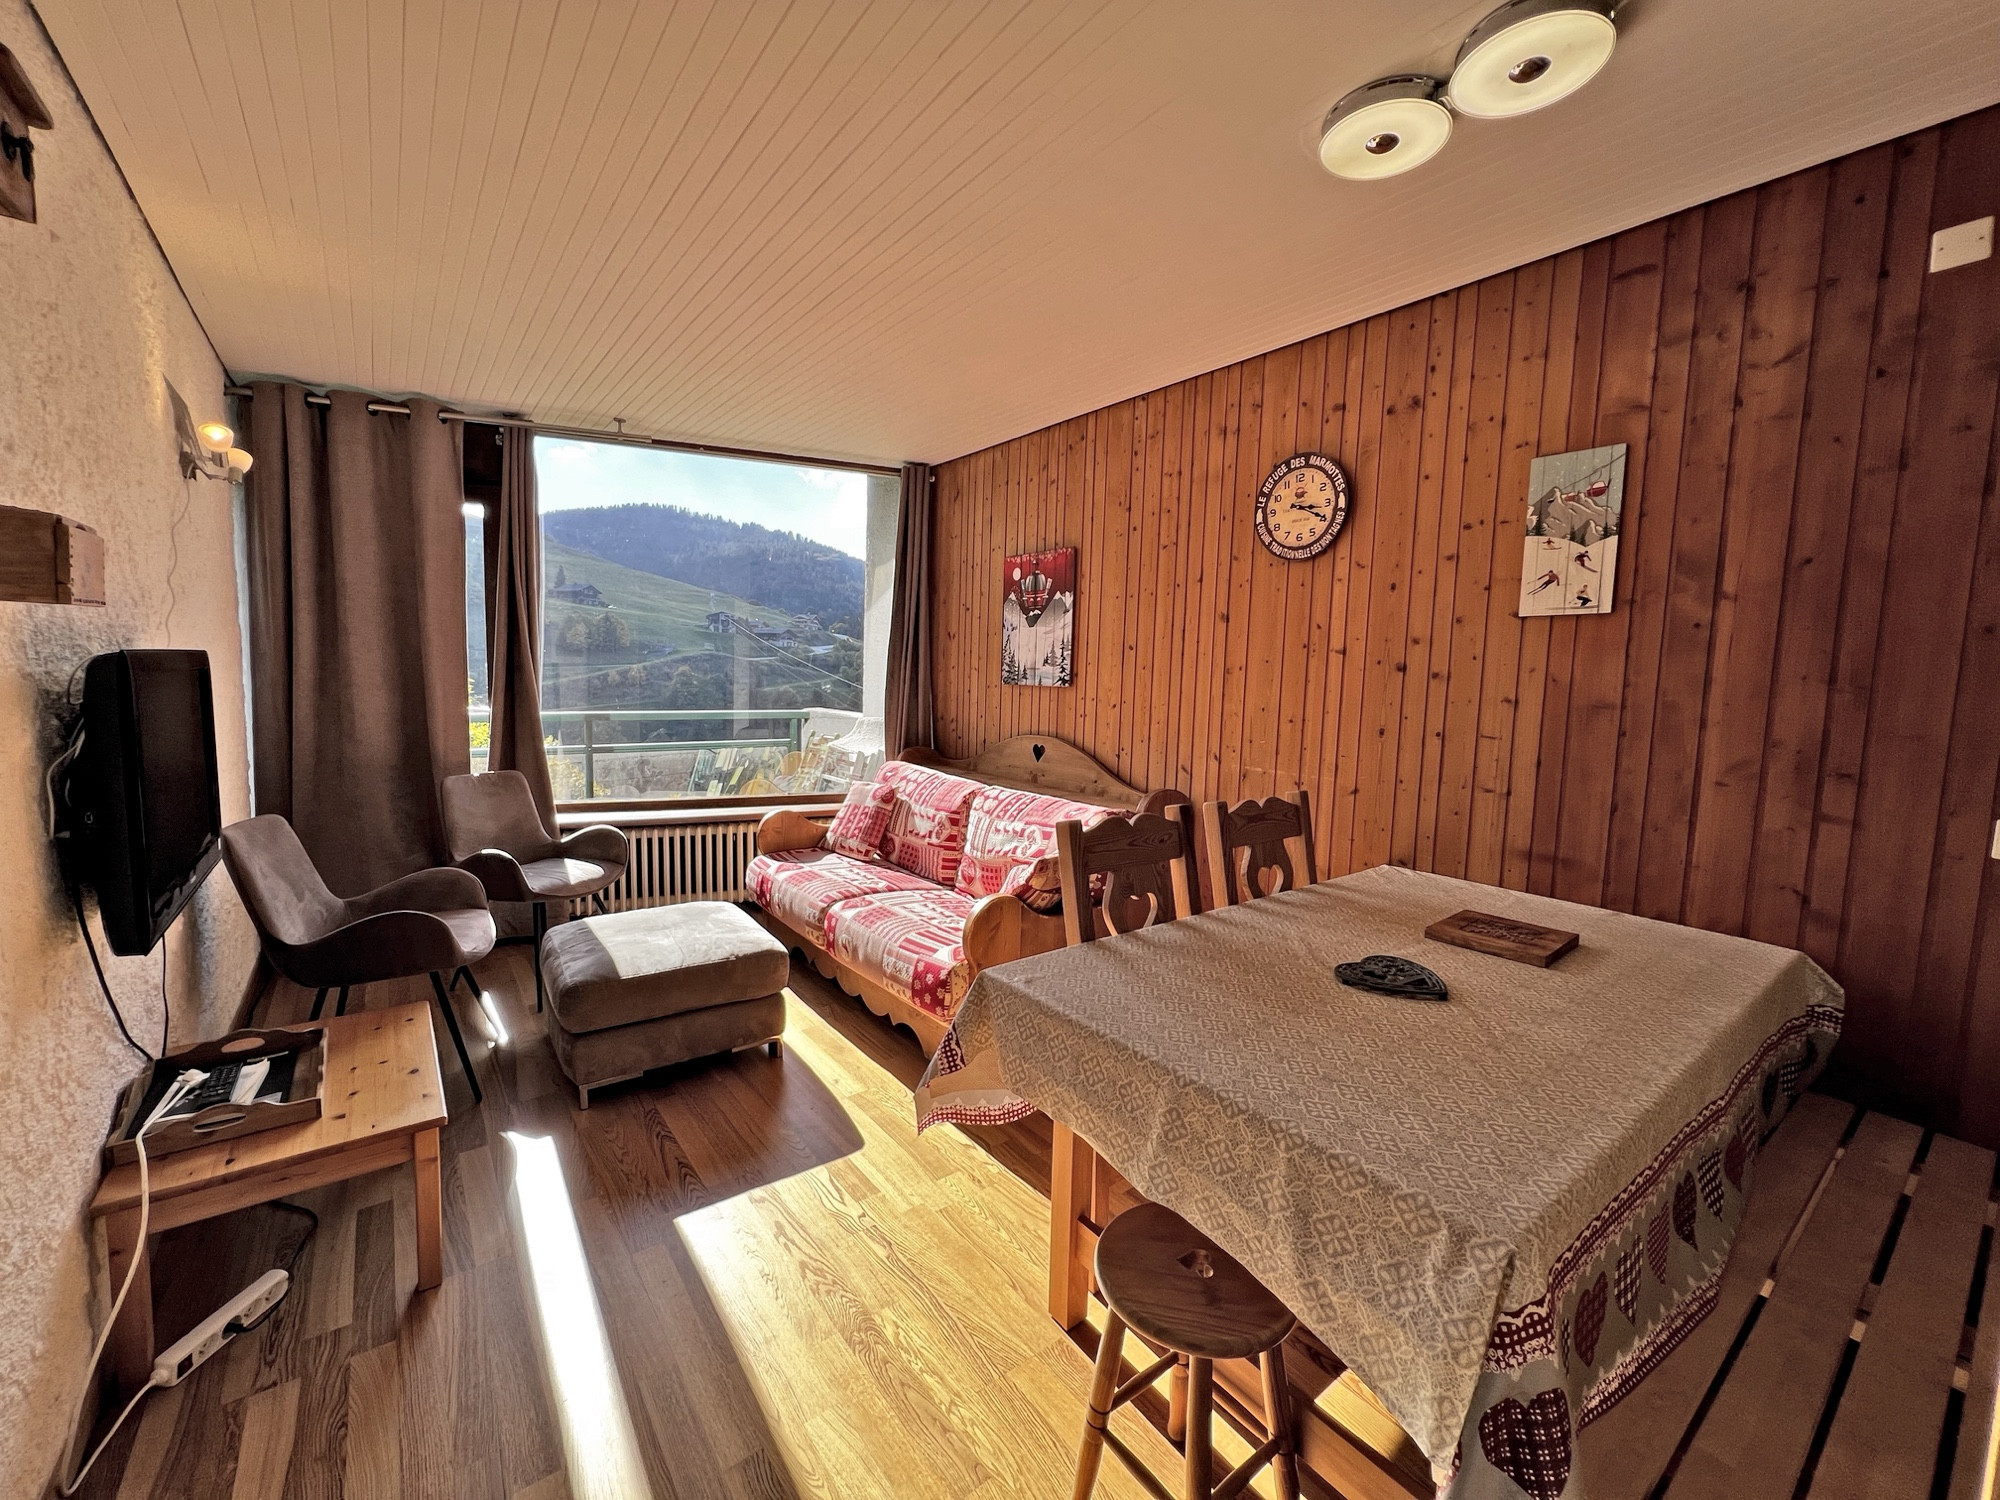  in La Clusaz - Aravis 1500, apartment 11 - 2* ski-in ski-out for 6 people